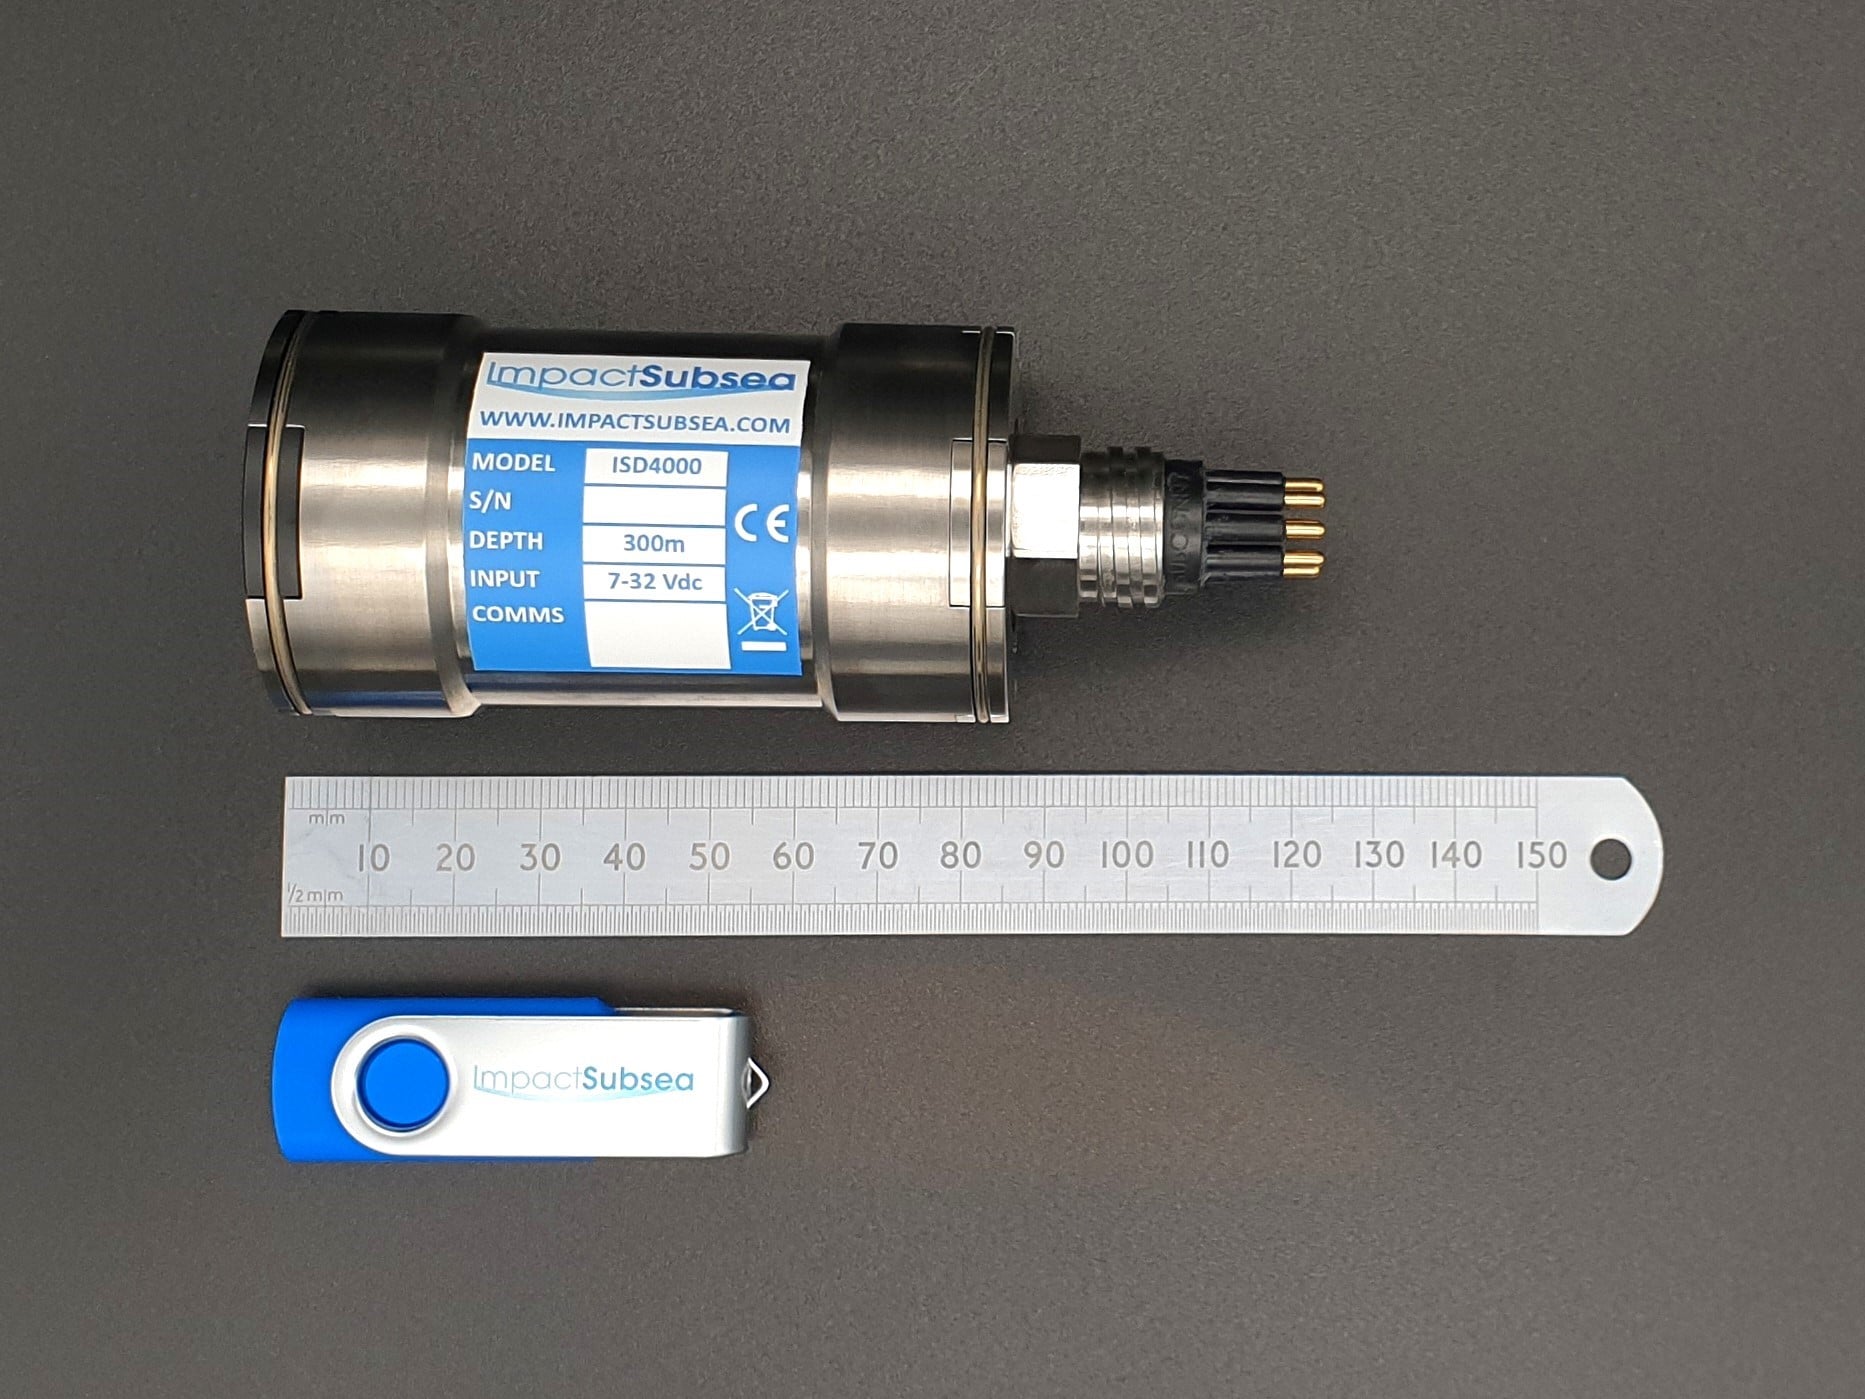 Impact Subsea ISD4000 Depth Sensor Compact Size